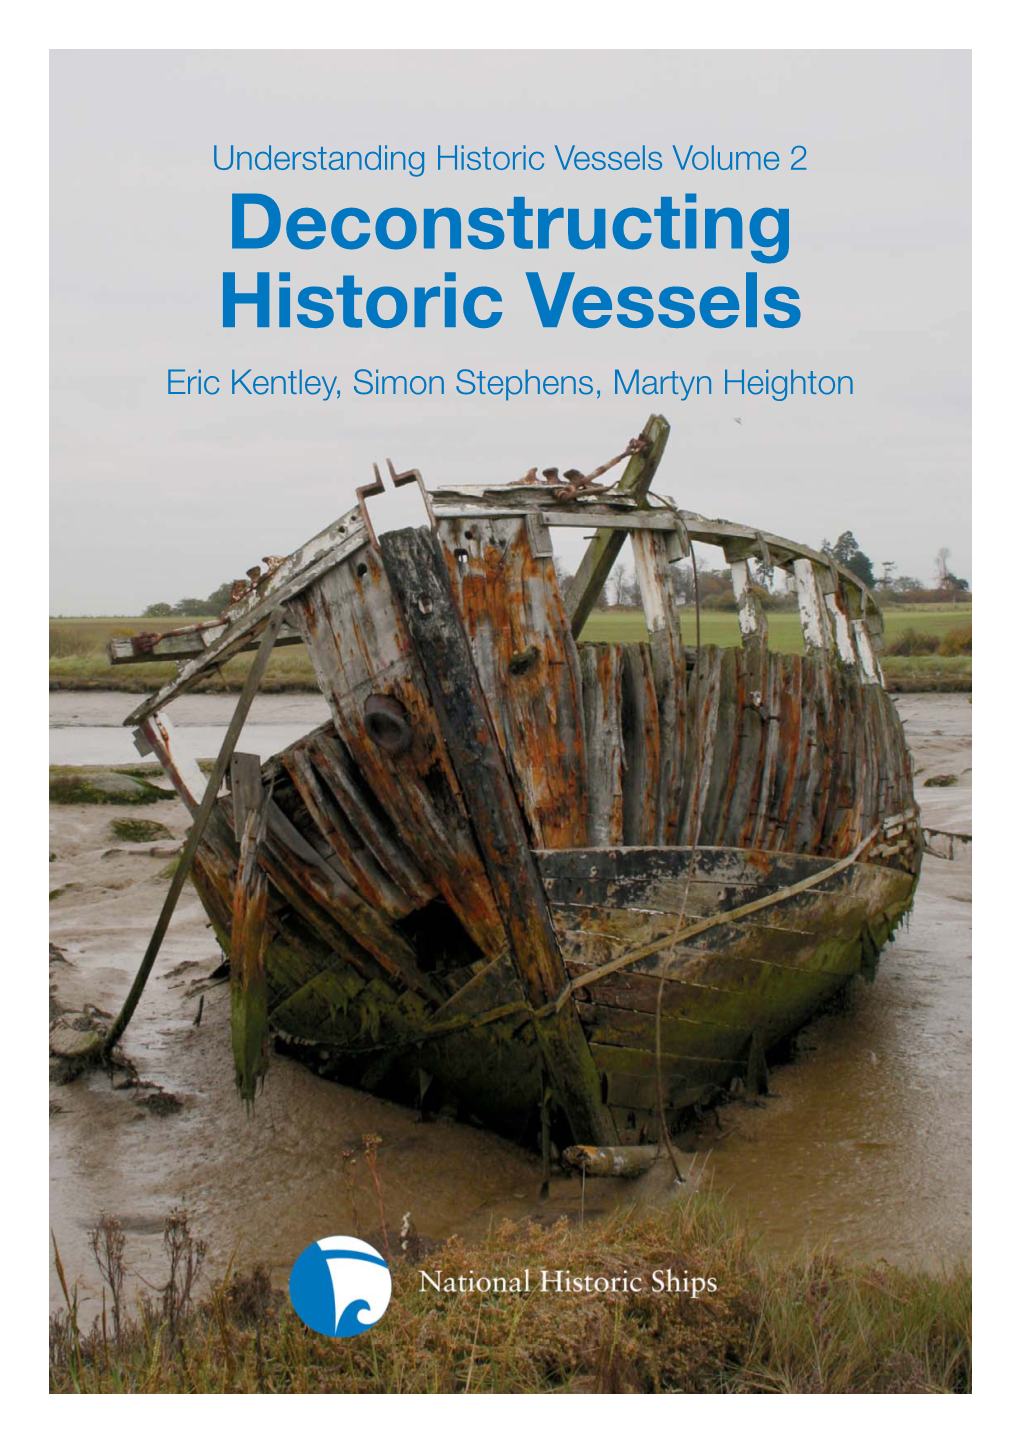 Deconstructing Historic Vessels Eric Kentley, Simon Stephens, Martyn Heighton